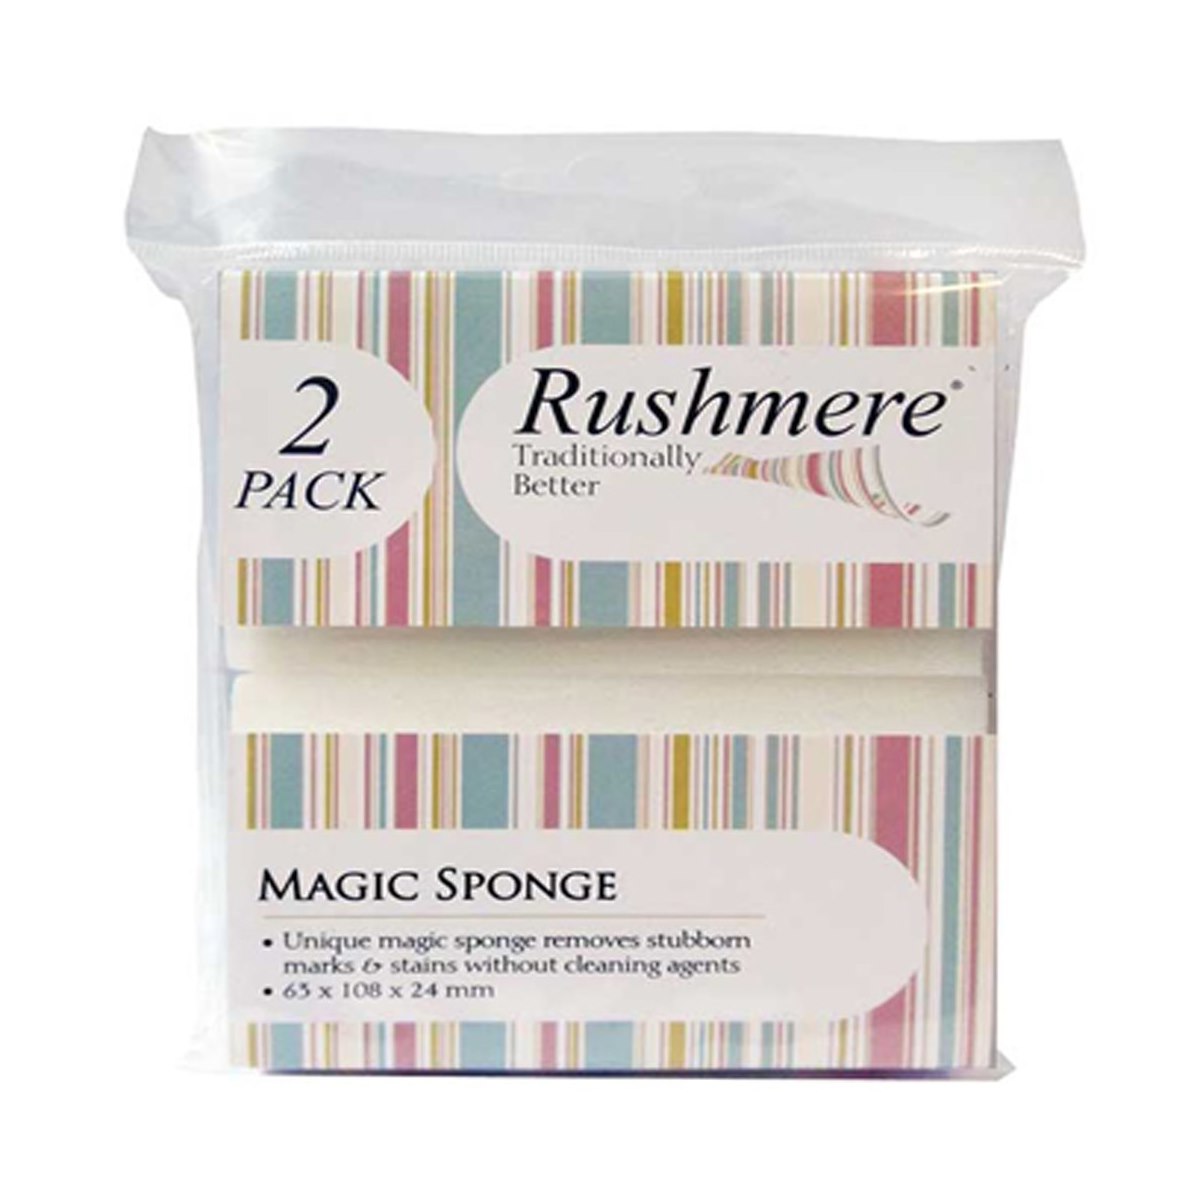 Rushmere Magic Sponge 2 Pack